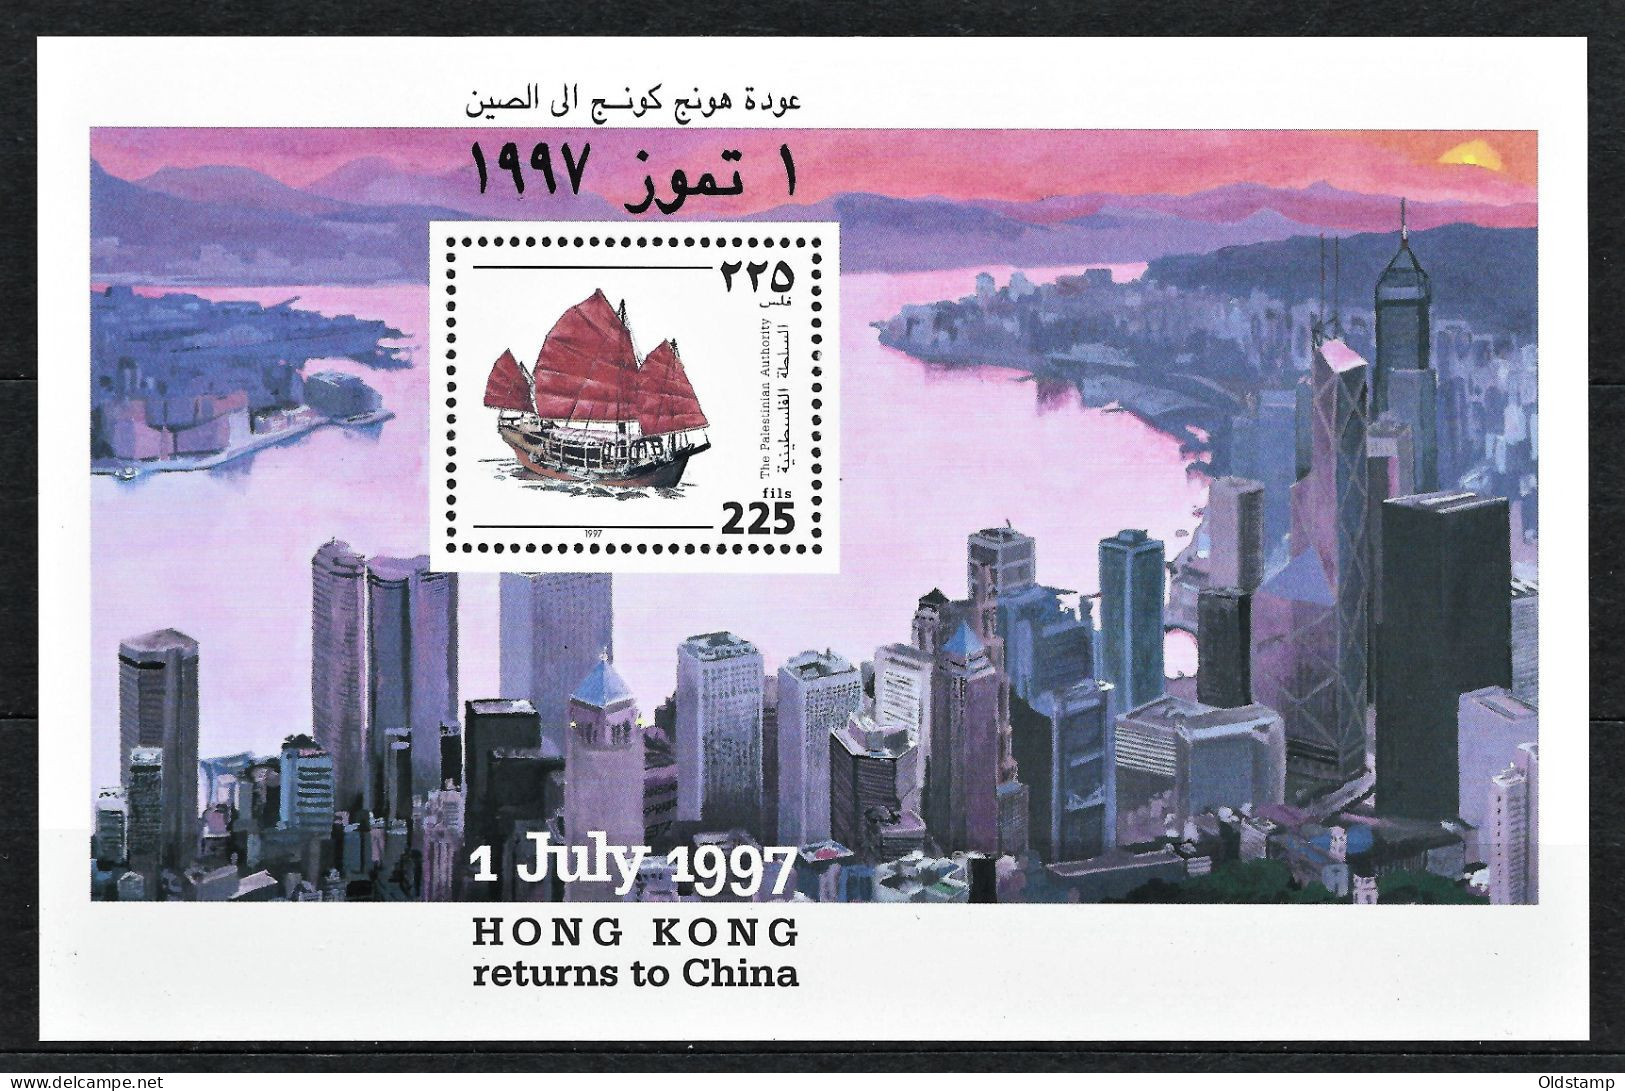 Palestinian Authority Palestina 1997 Ship Sailorship Boat Hong Kong China Town Skyscrapers Arabian MNH Stamp Block - Schiffe